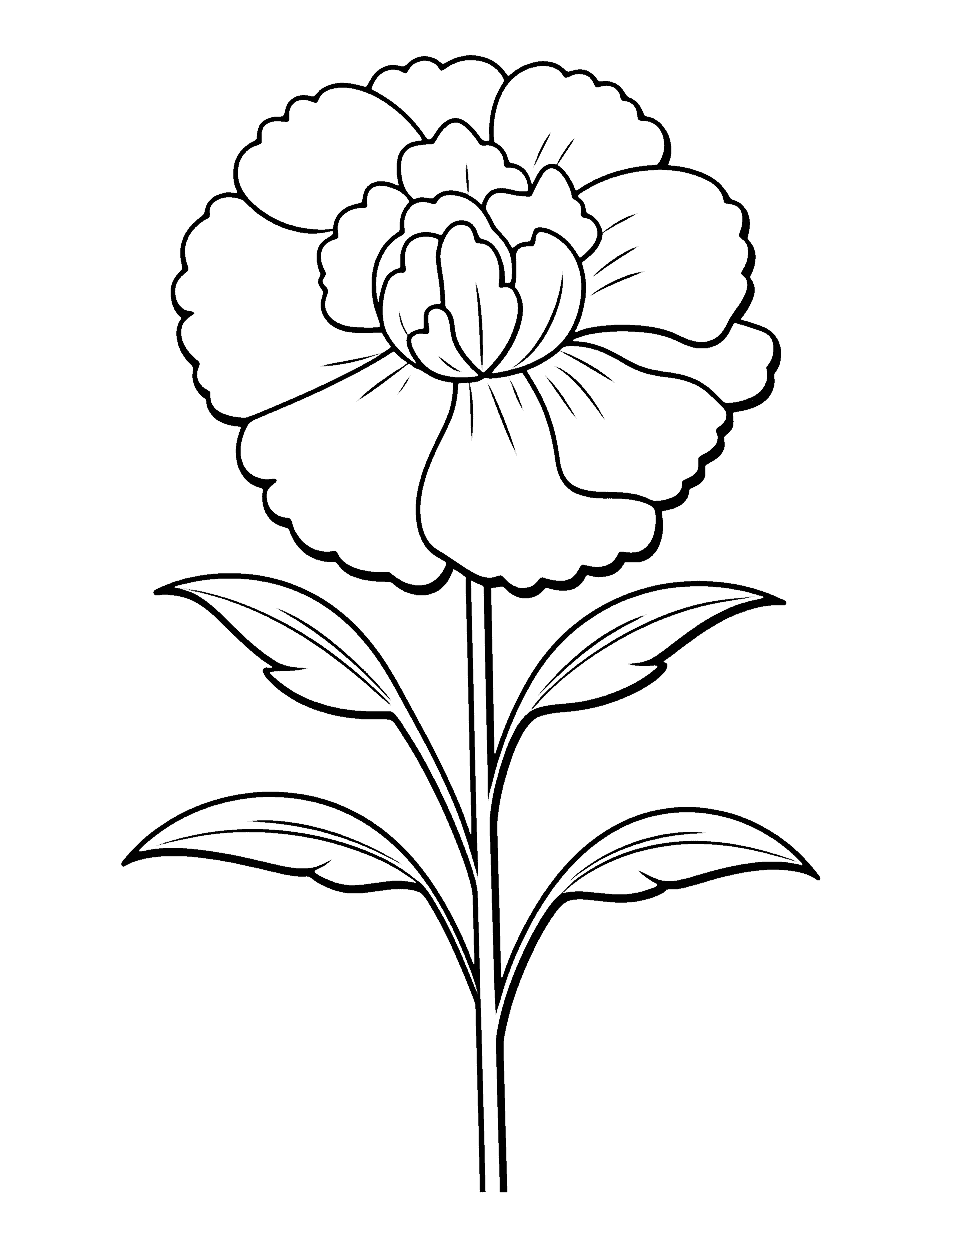 Kindergarten Carnation Flower Coloring Page - An easy, large carnation flower for kindergarten kids.